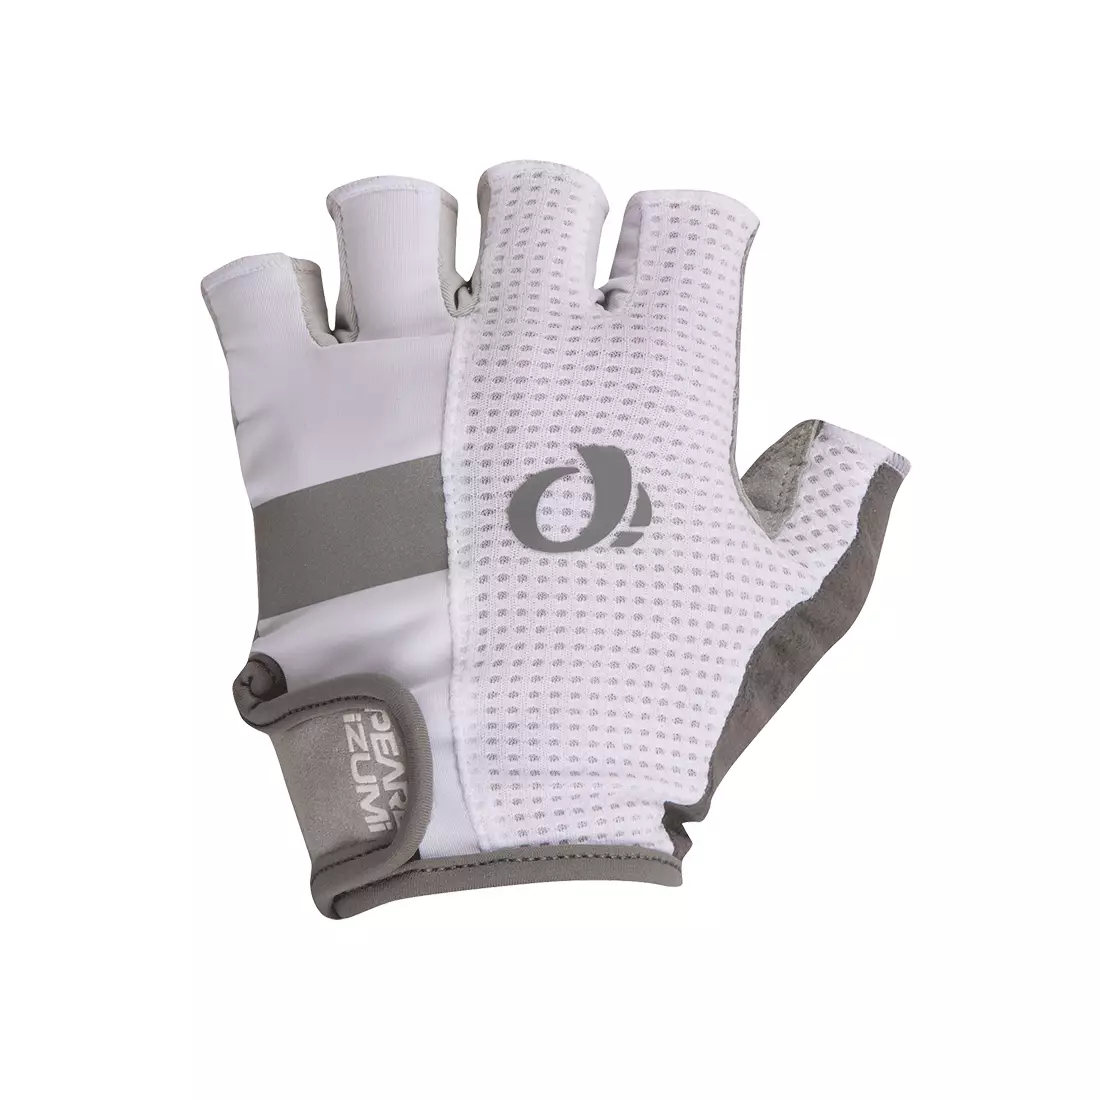 PEARL IZUMI ELITE cycling gloves, GEL 14141601-508 white